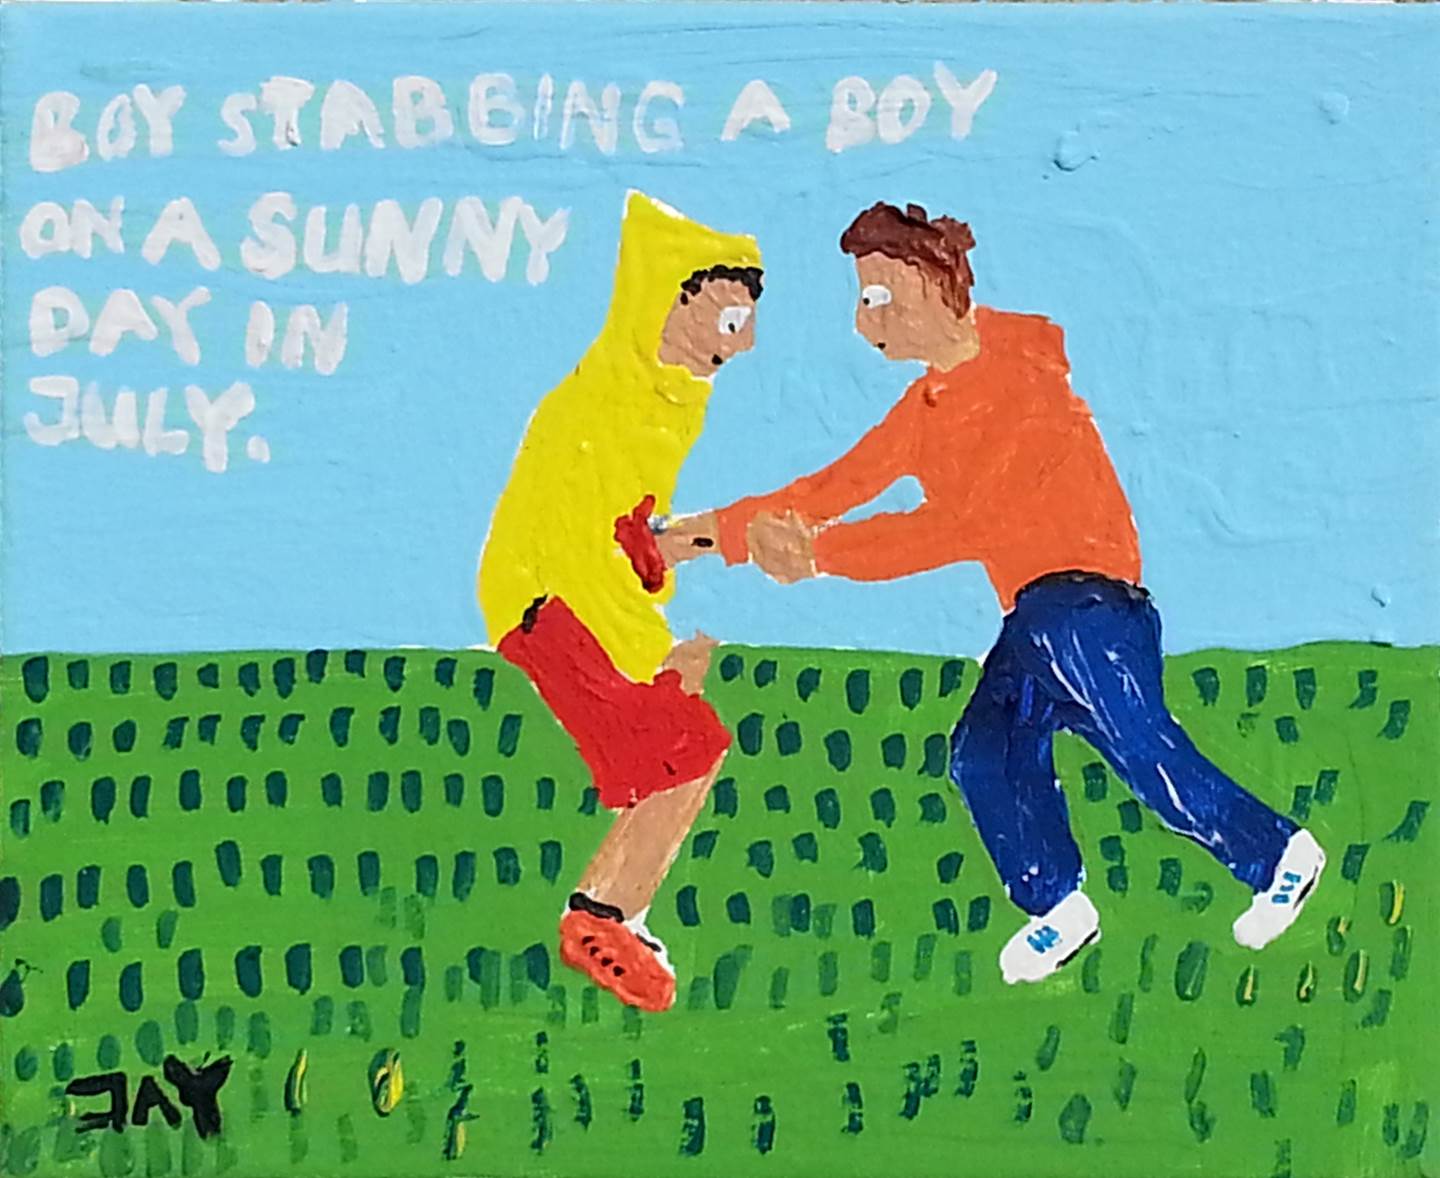 Boy stabbing a boy on a sunny day in July, original Vanguardia Acrílico Pintura de Jay Rechsteiner